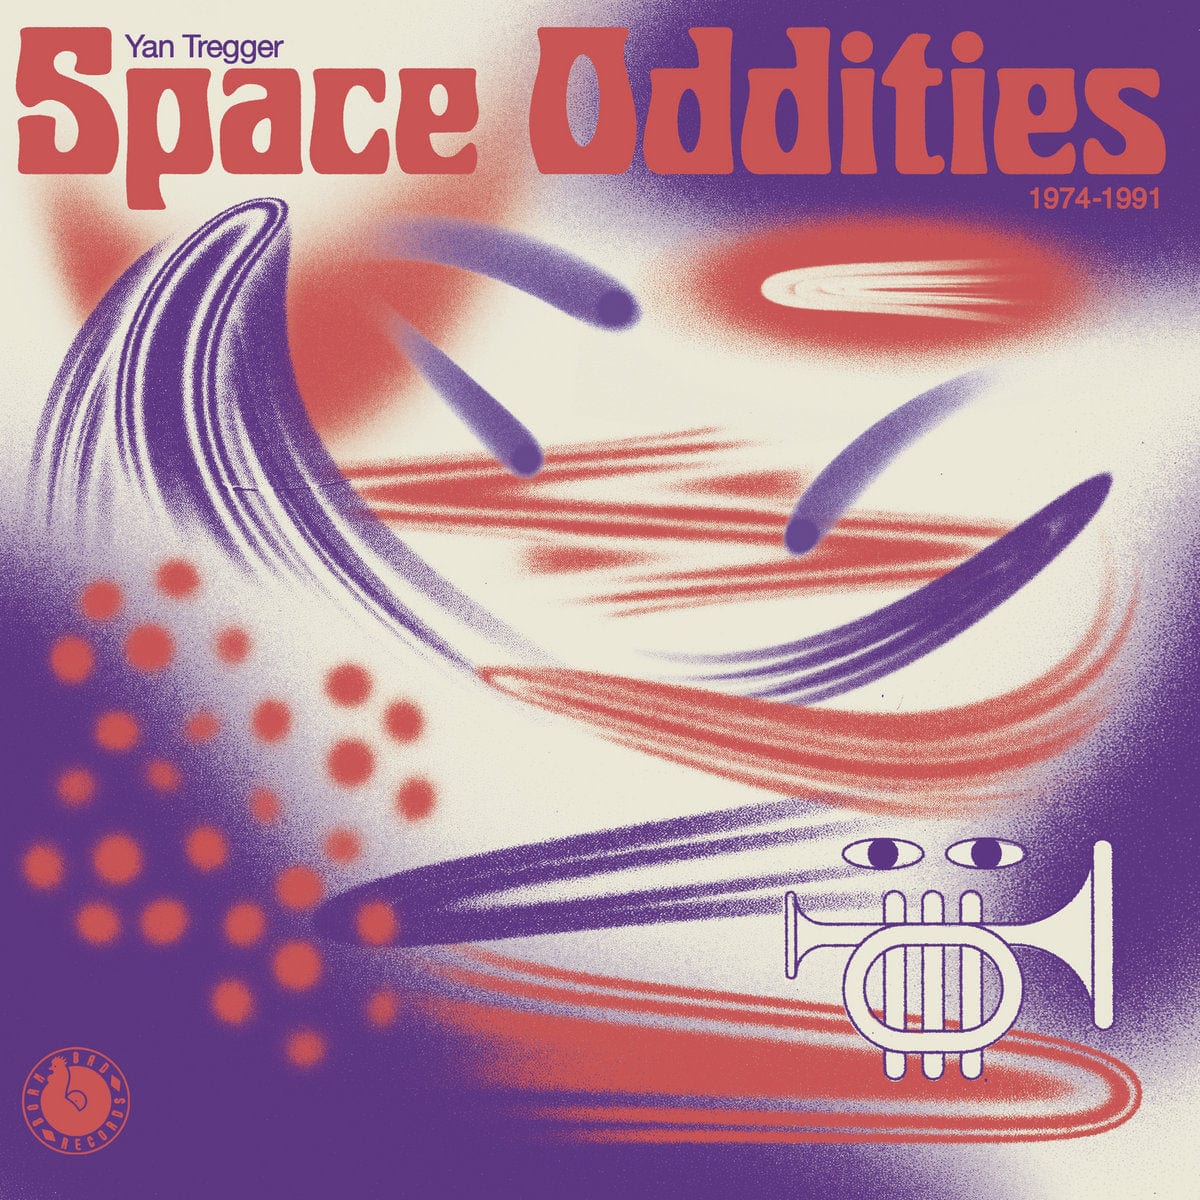 Tregger, Yan - Space Oddities (1974-1991)